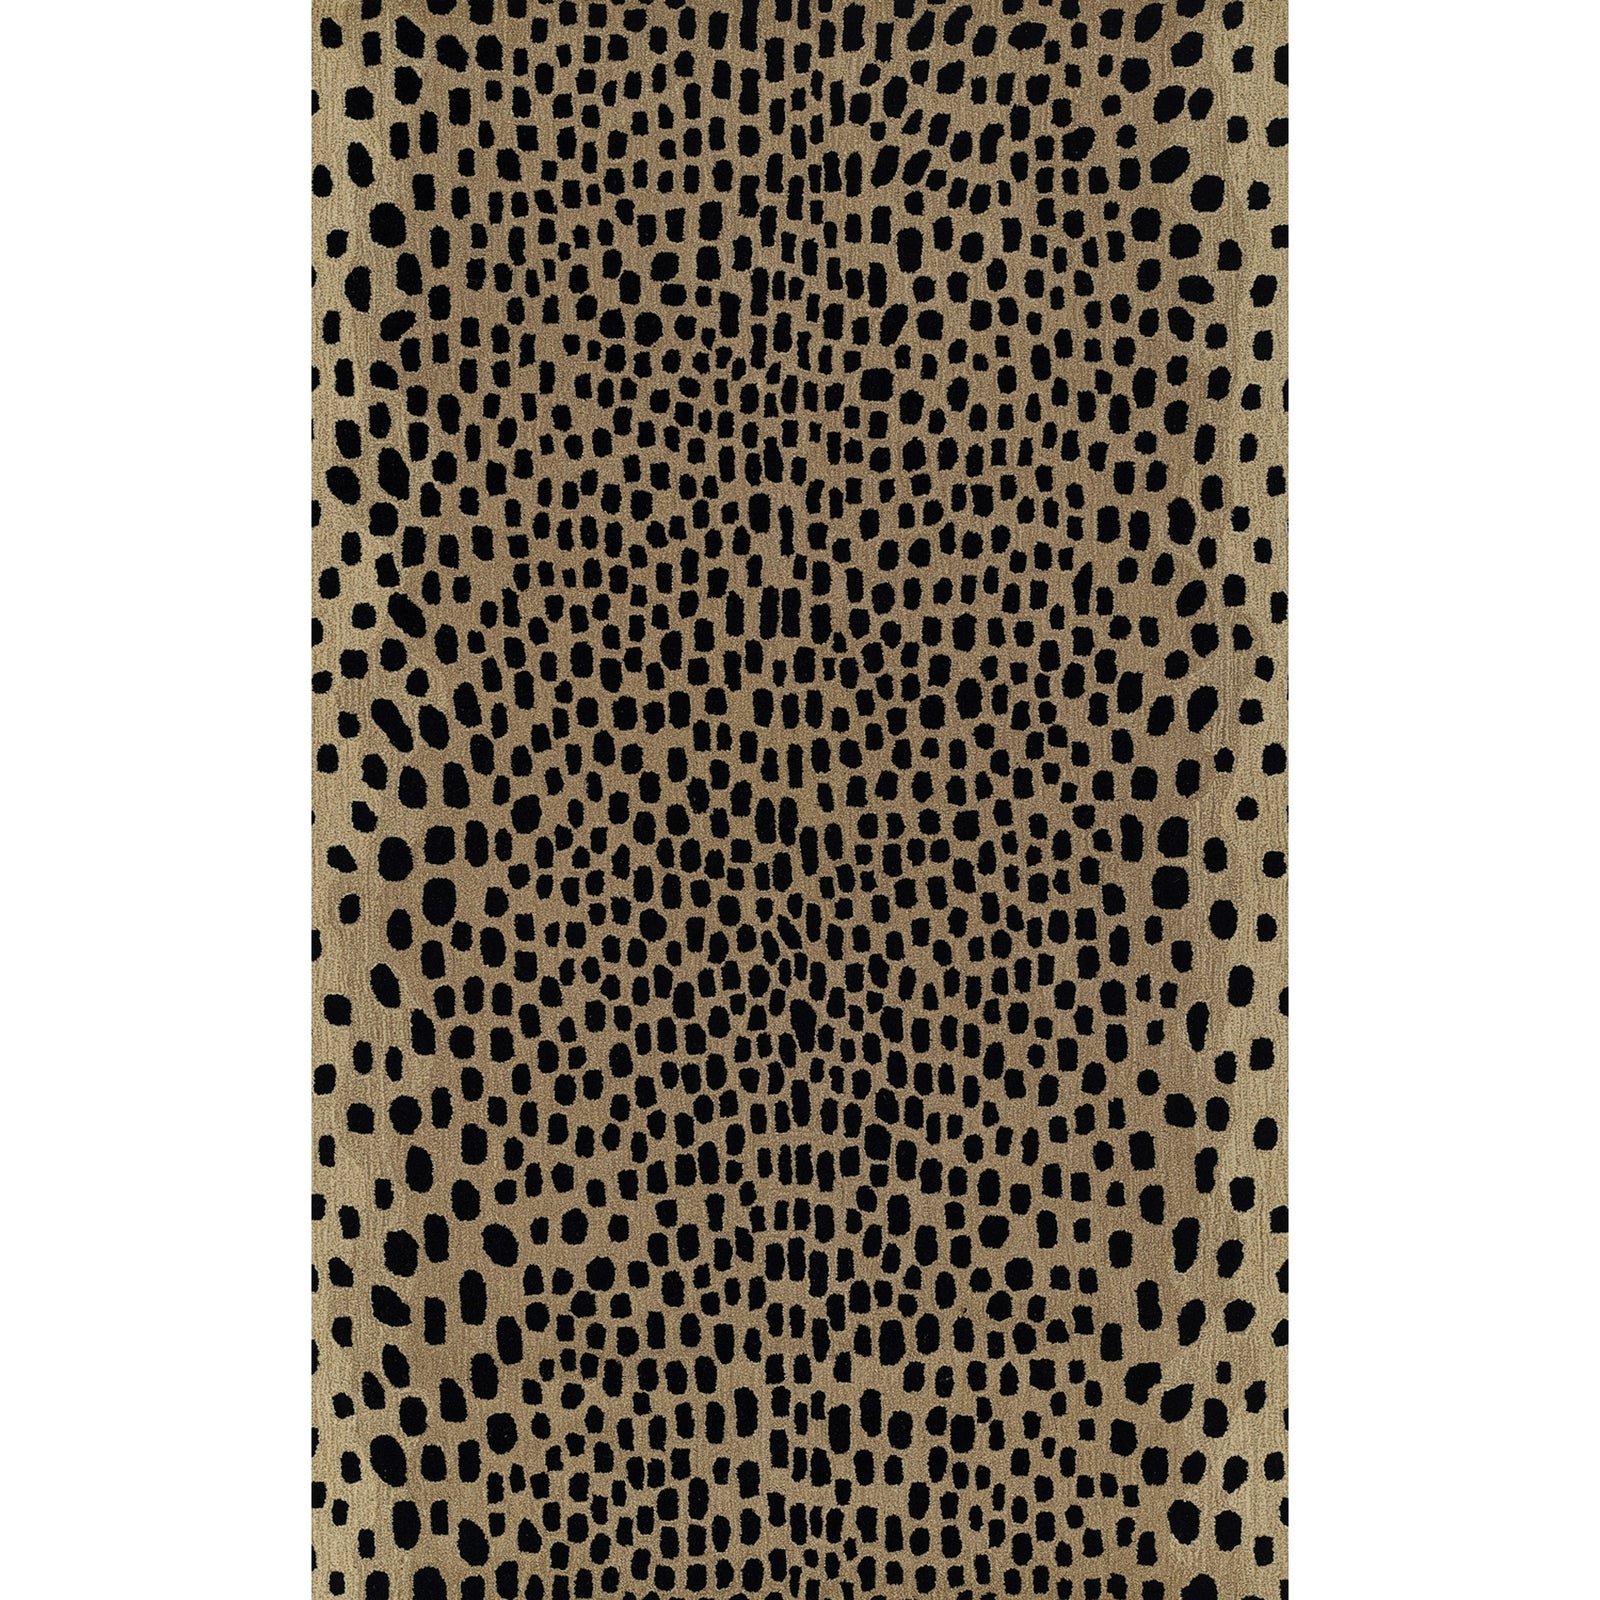 Erin Gates by Momeni Woodland Cheetah Beige Hand Tufted Wool Area Rug